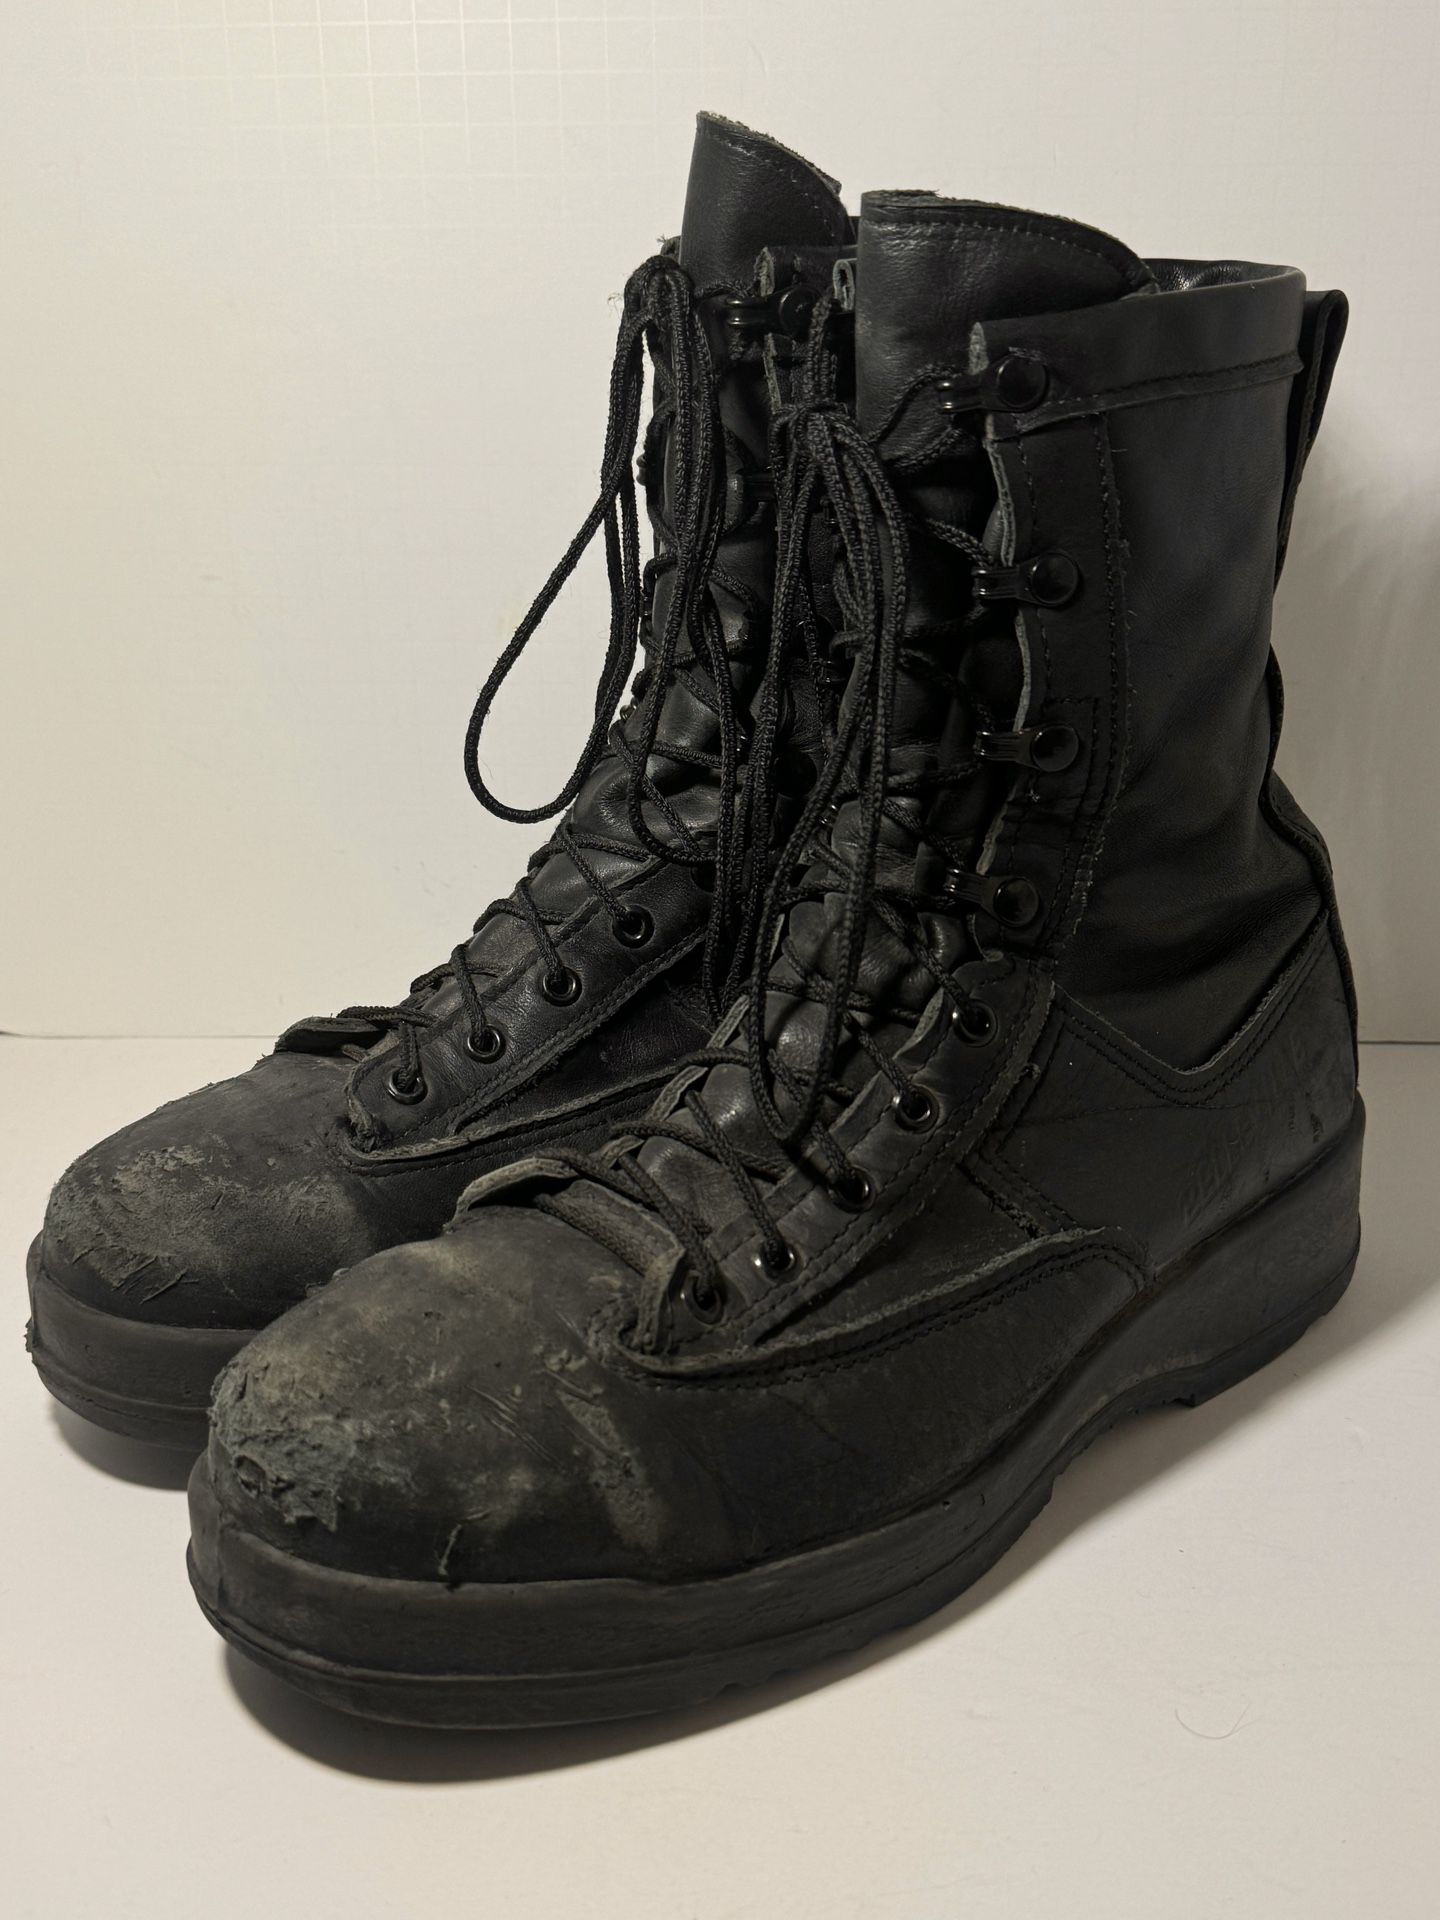 Belleville 800 ST GoreTex Safety Steel Toe Military Duty Work Boots Men 9.5